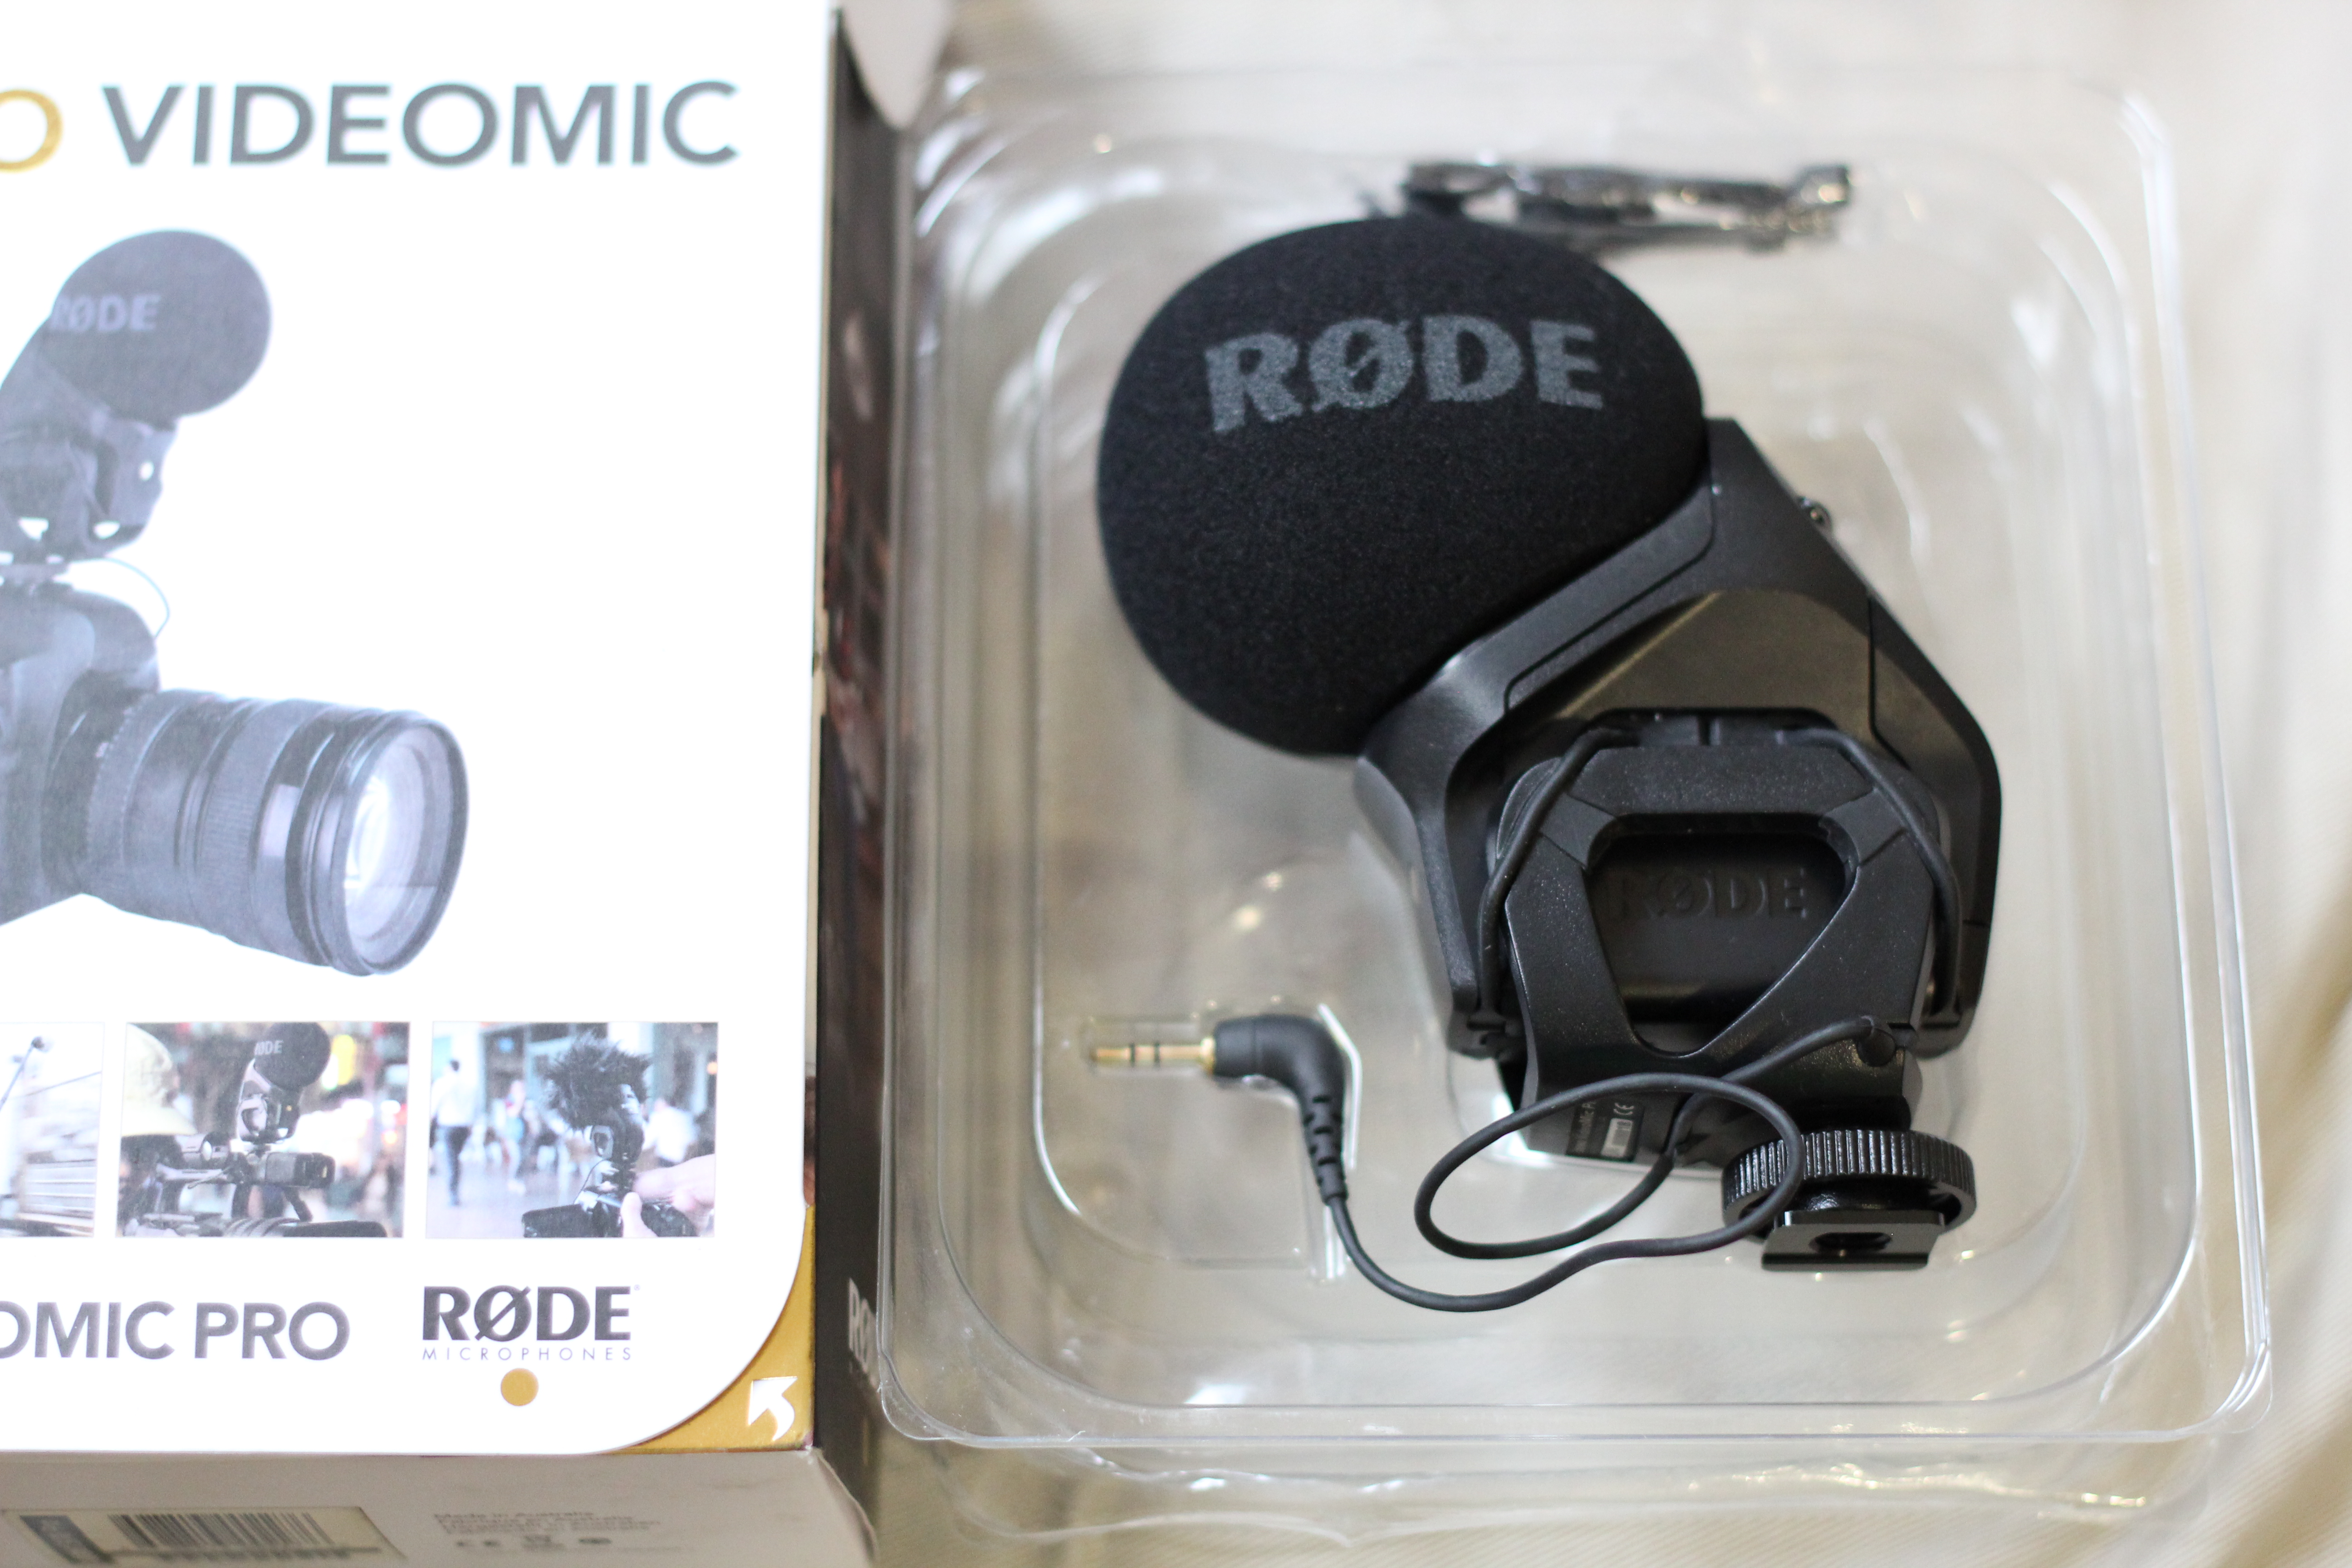 File:Rode Stereo VideoMic Pro.jpg - Wikimedia Commons